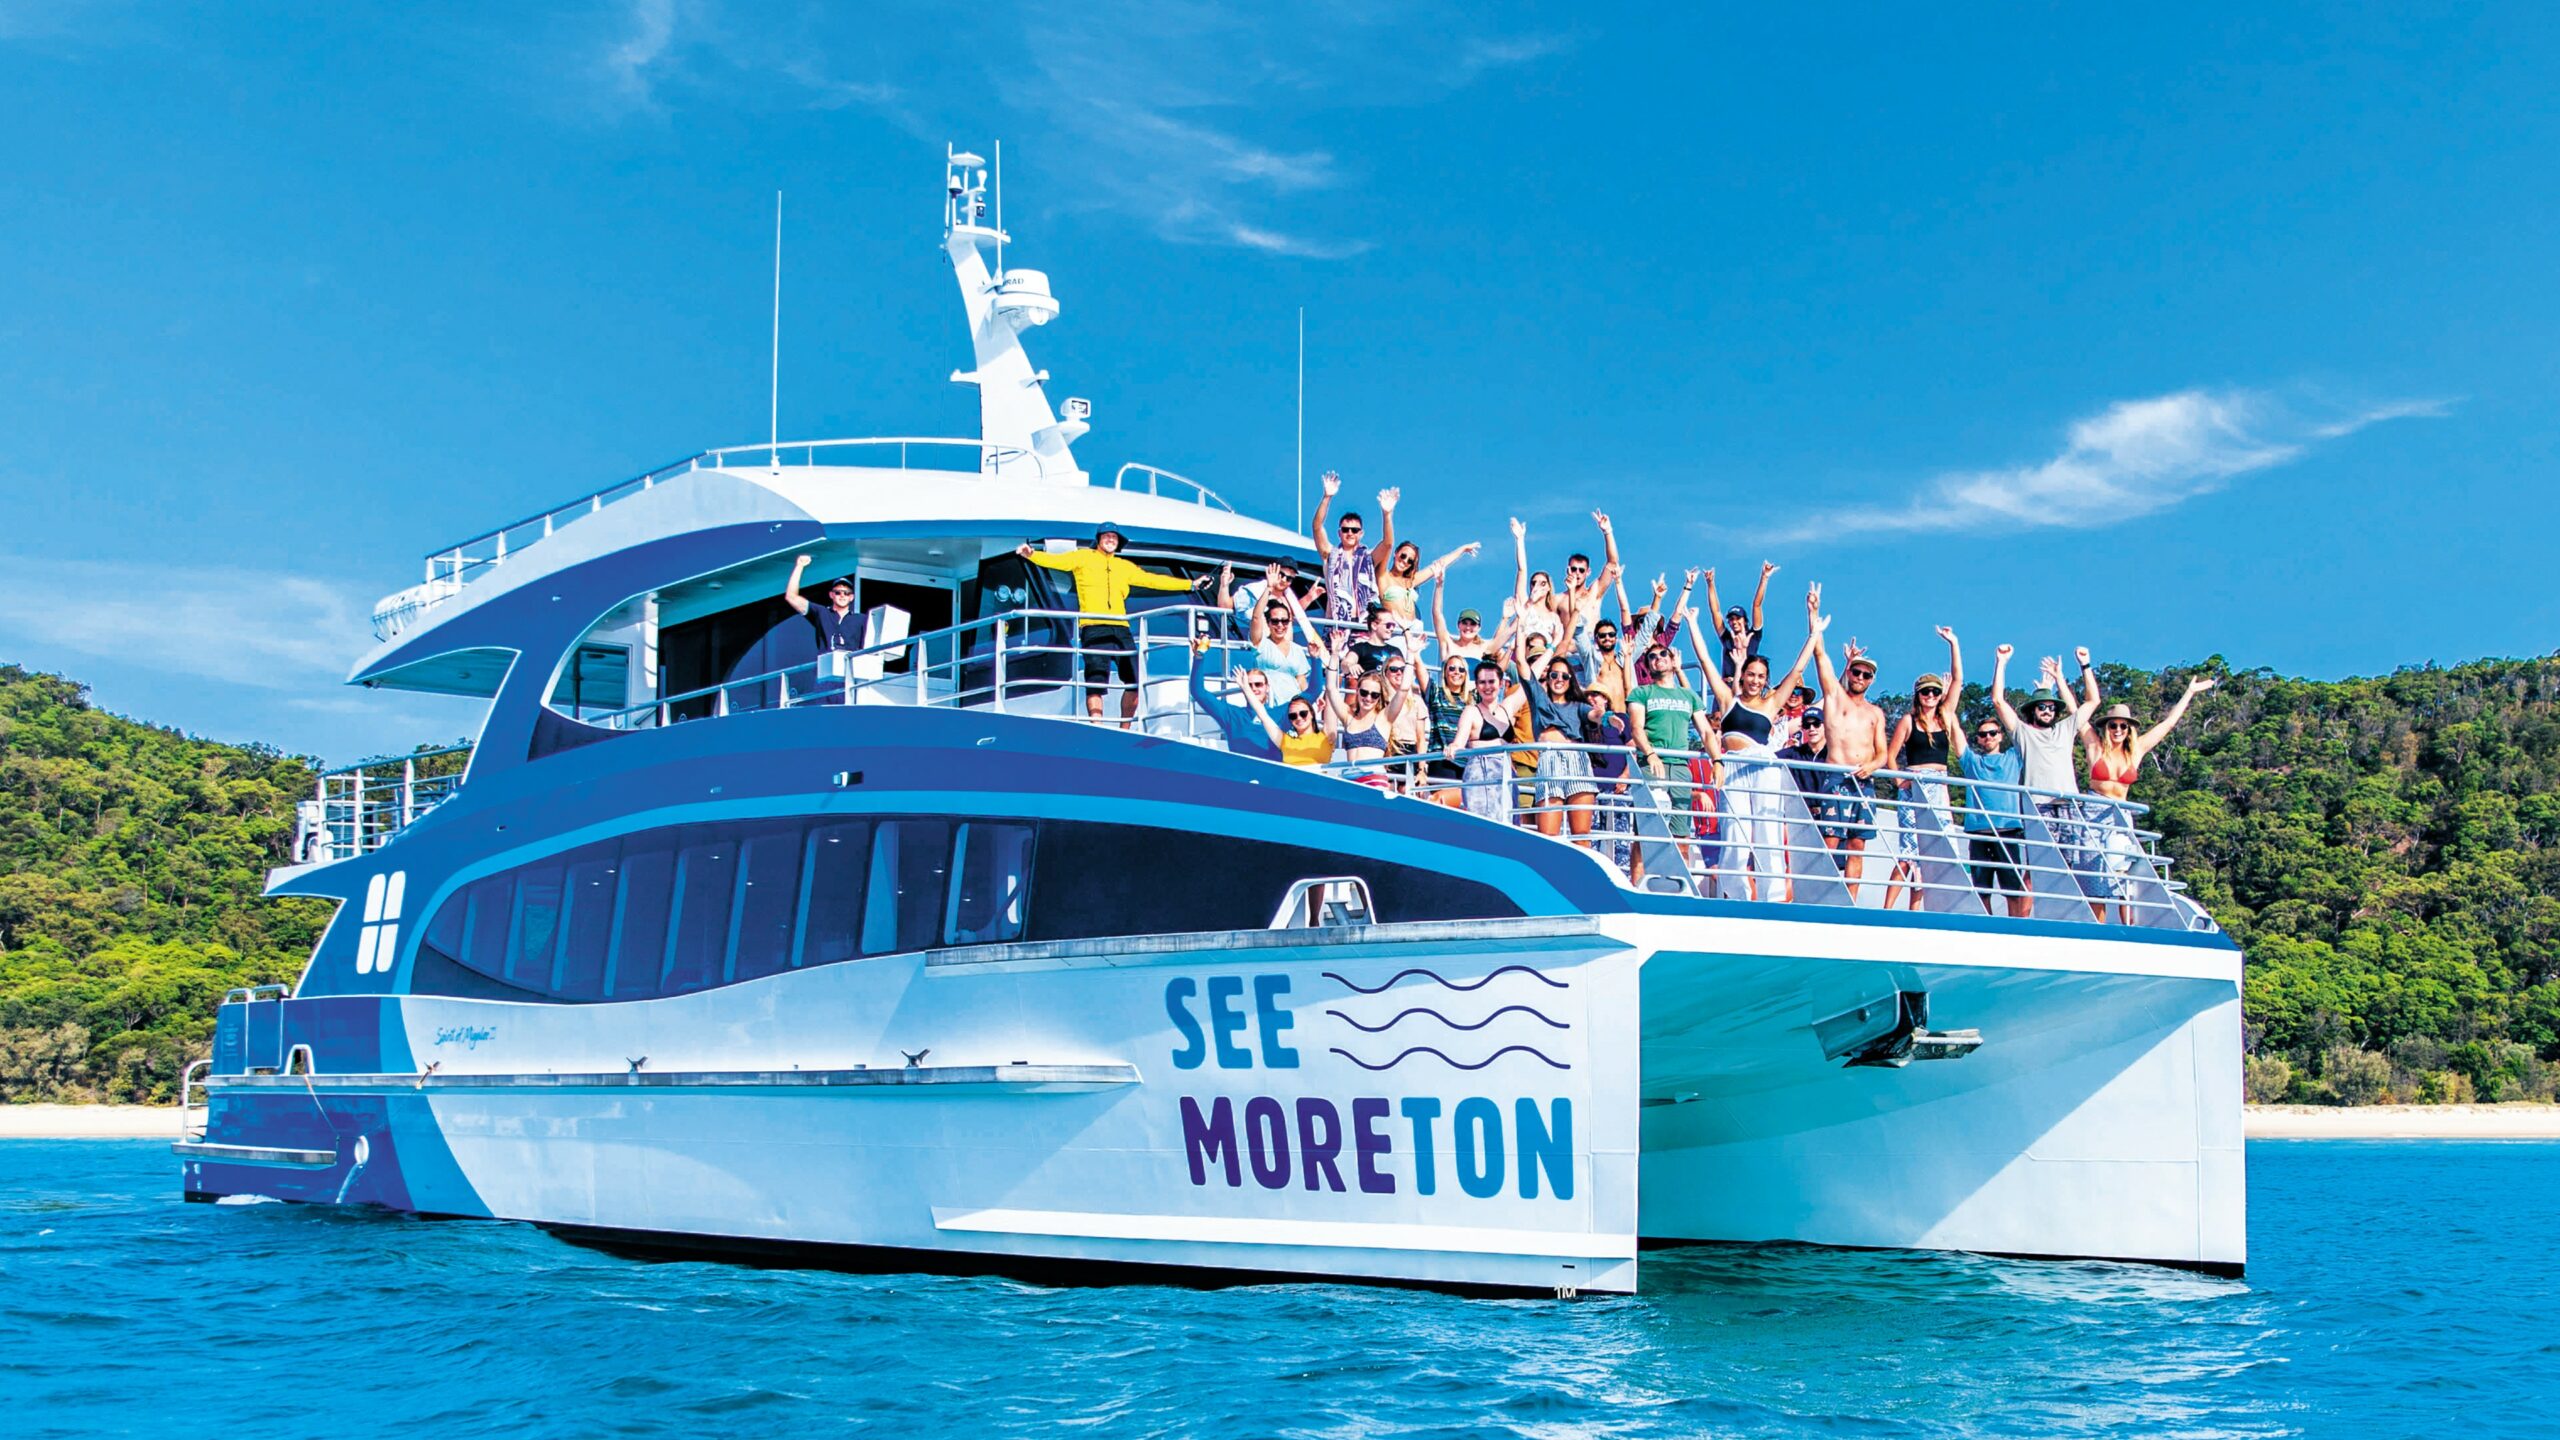 See Moreton (ex Brisbane)